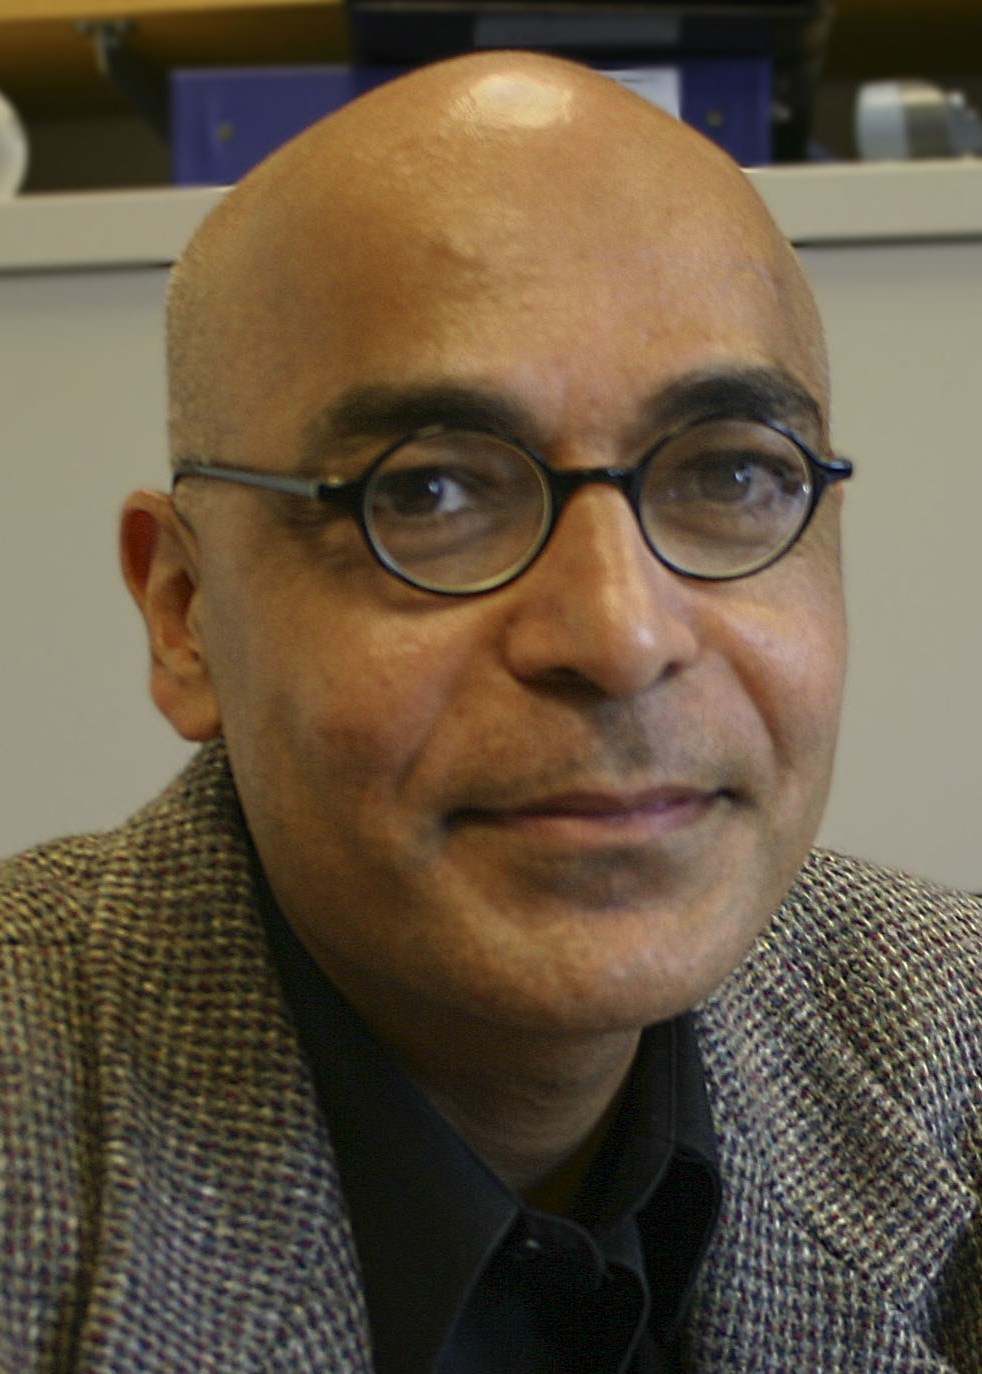 Dr. K. Viswanath